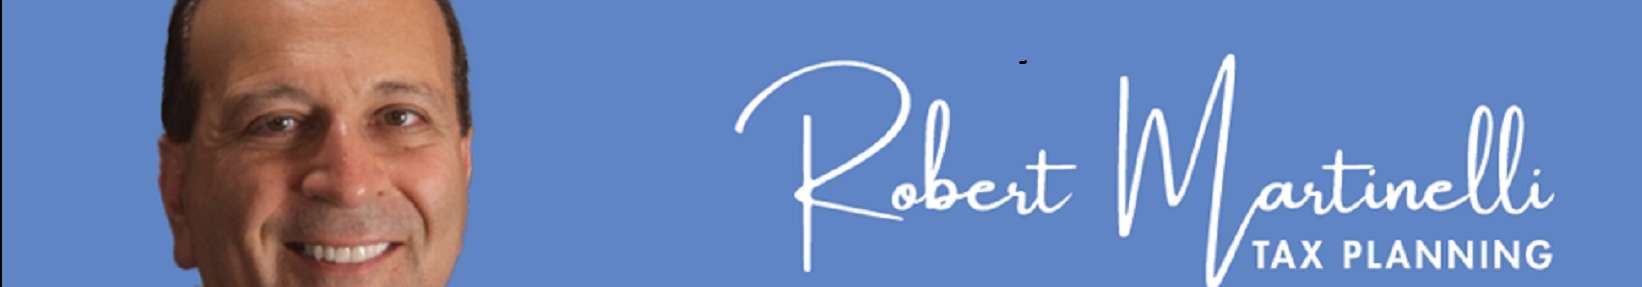 Robert Nico Martinelli's profile banner